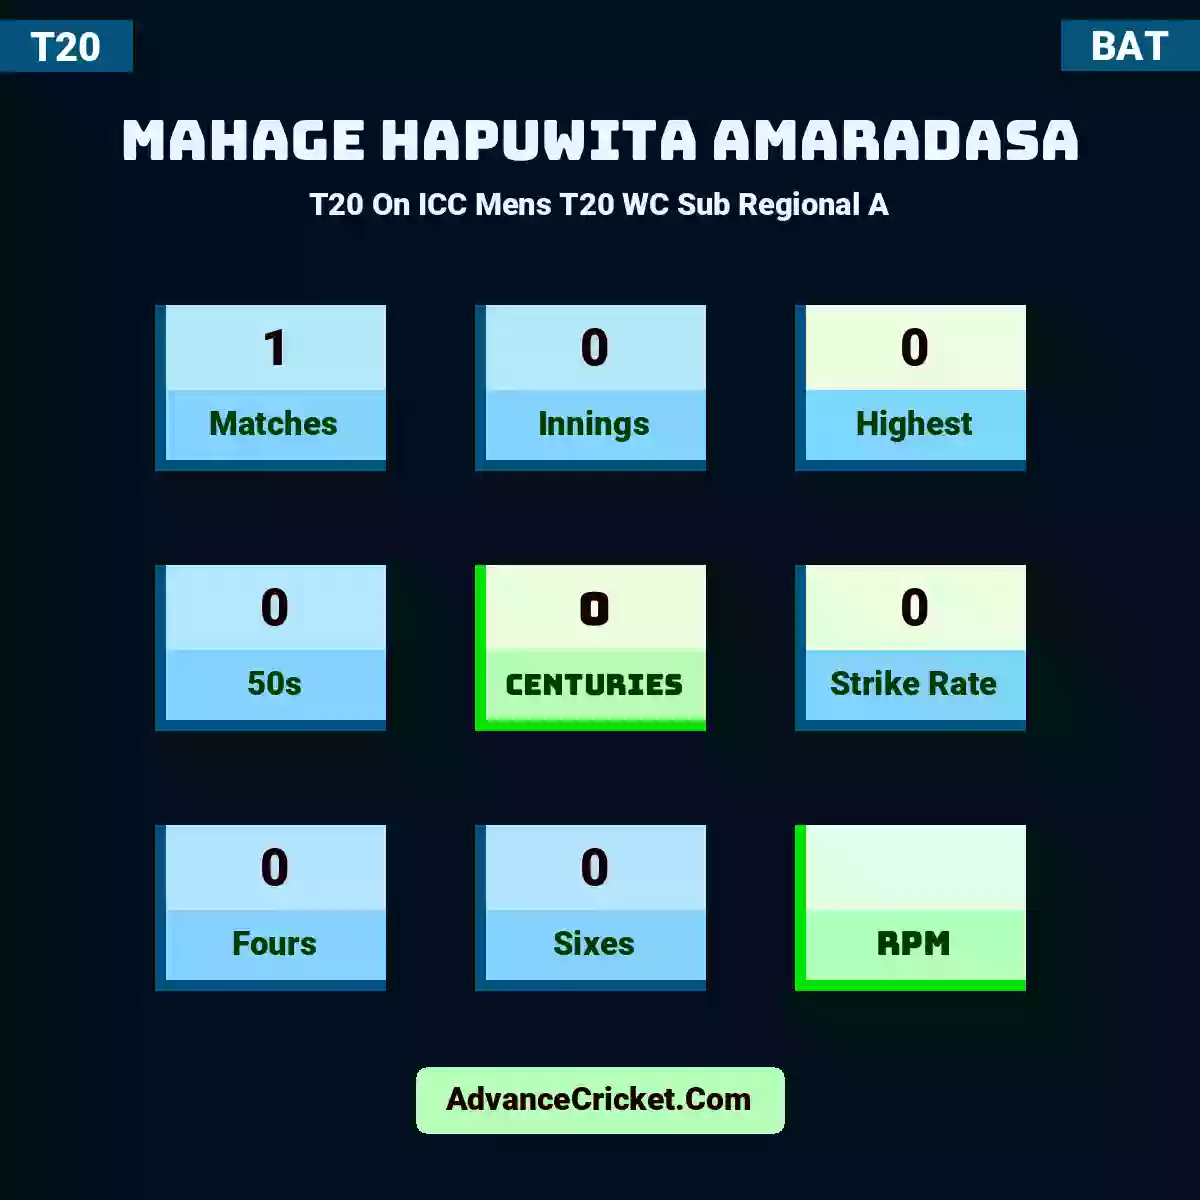 Mahage Hapuwita Amaradasa T20  On ICC Mens T20 WC Sub Regional A, Mahage Hapuwita Amaradasa played 1 matches, scored 0 runs as highest, 0 half-centuries, and 0 centuries, with a strike rate of 0. M.Hapuwita.Amaradasa hit 0 fours and 0 sixes.